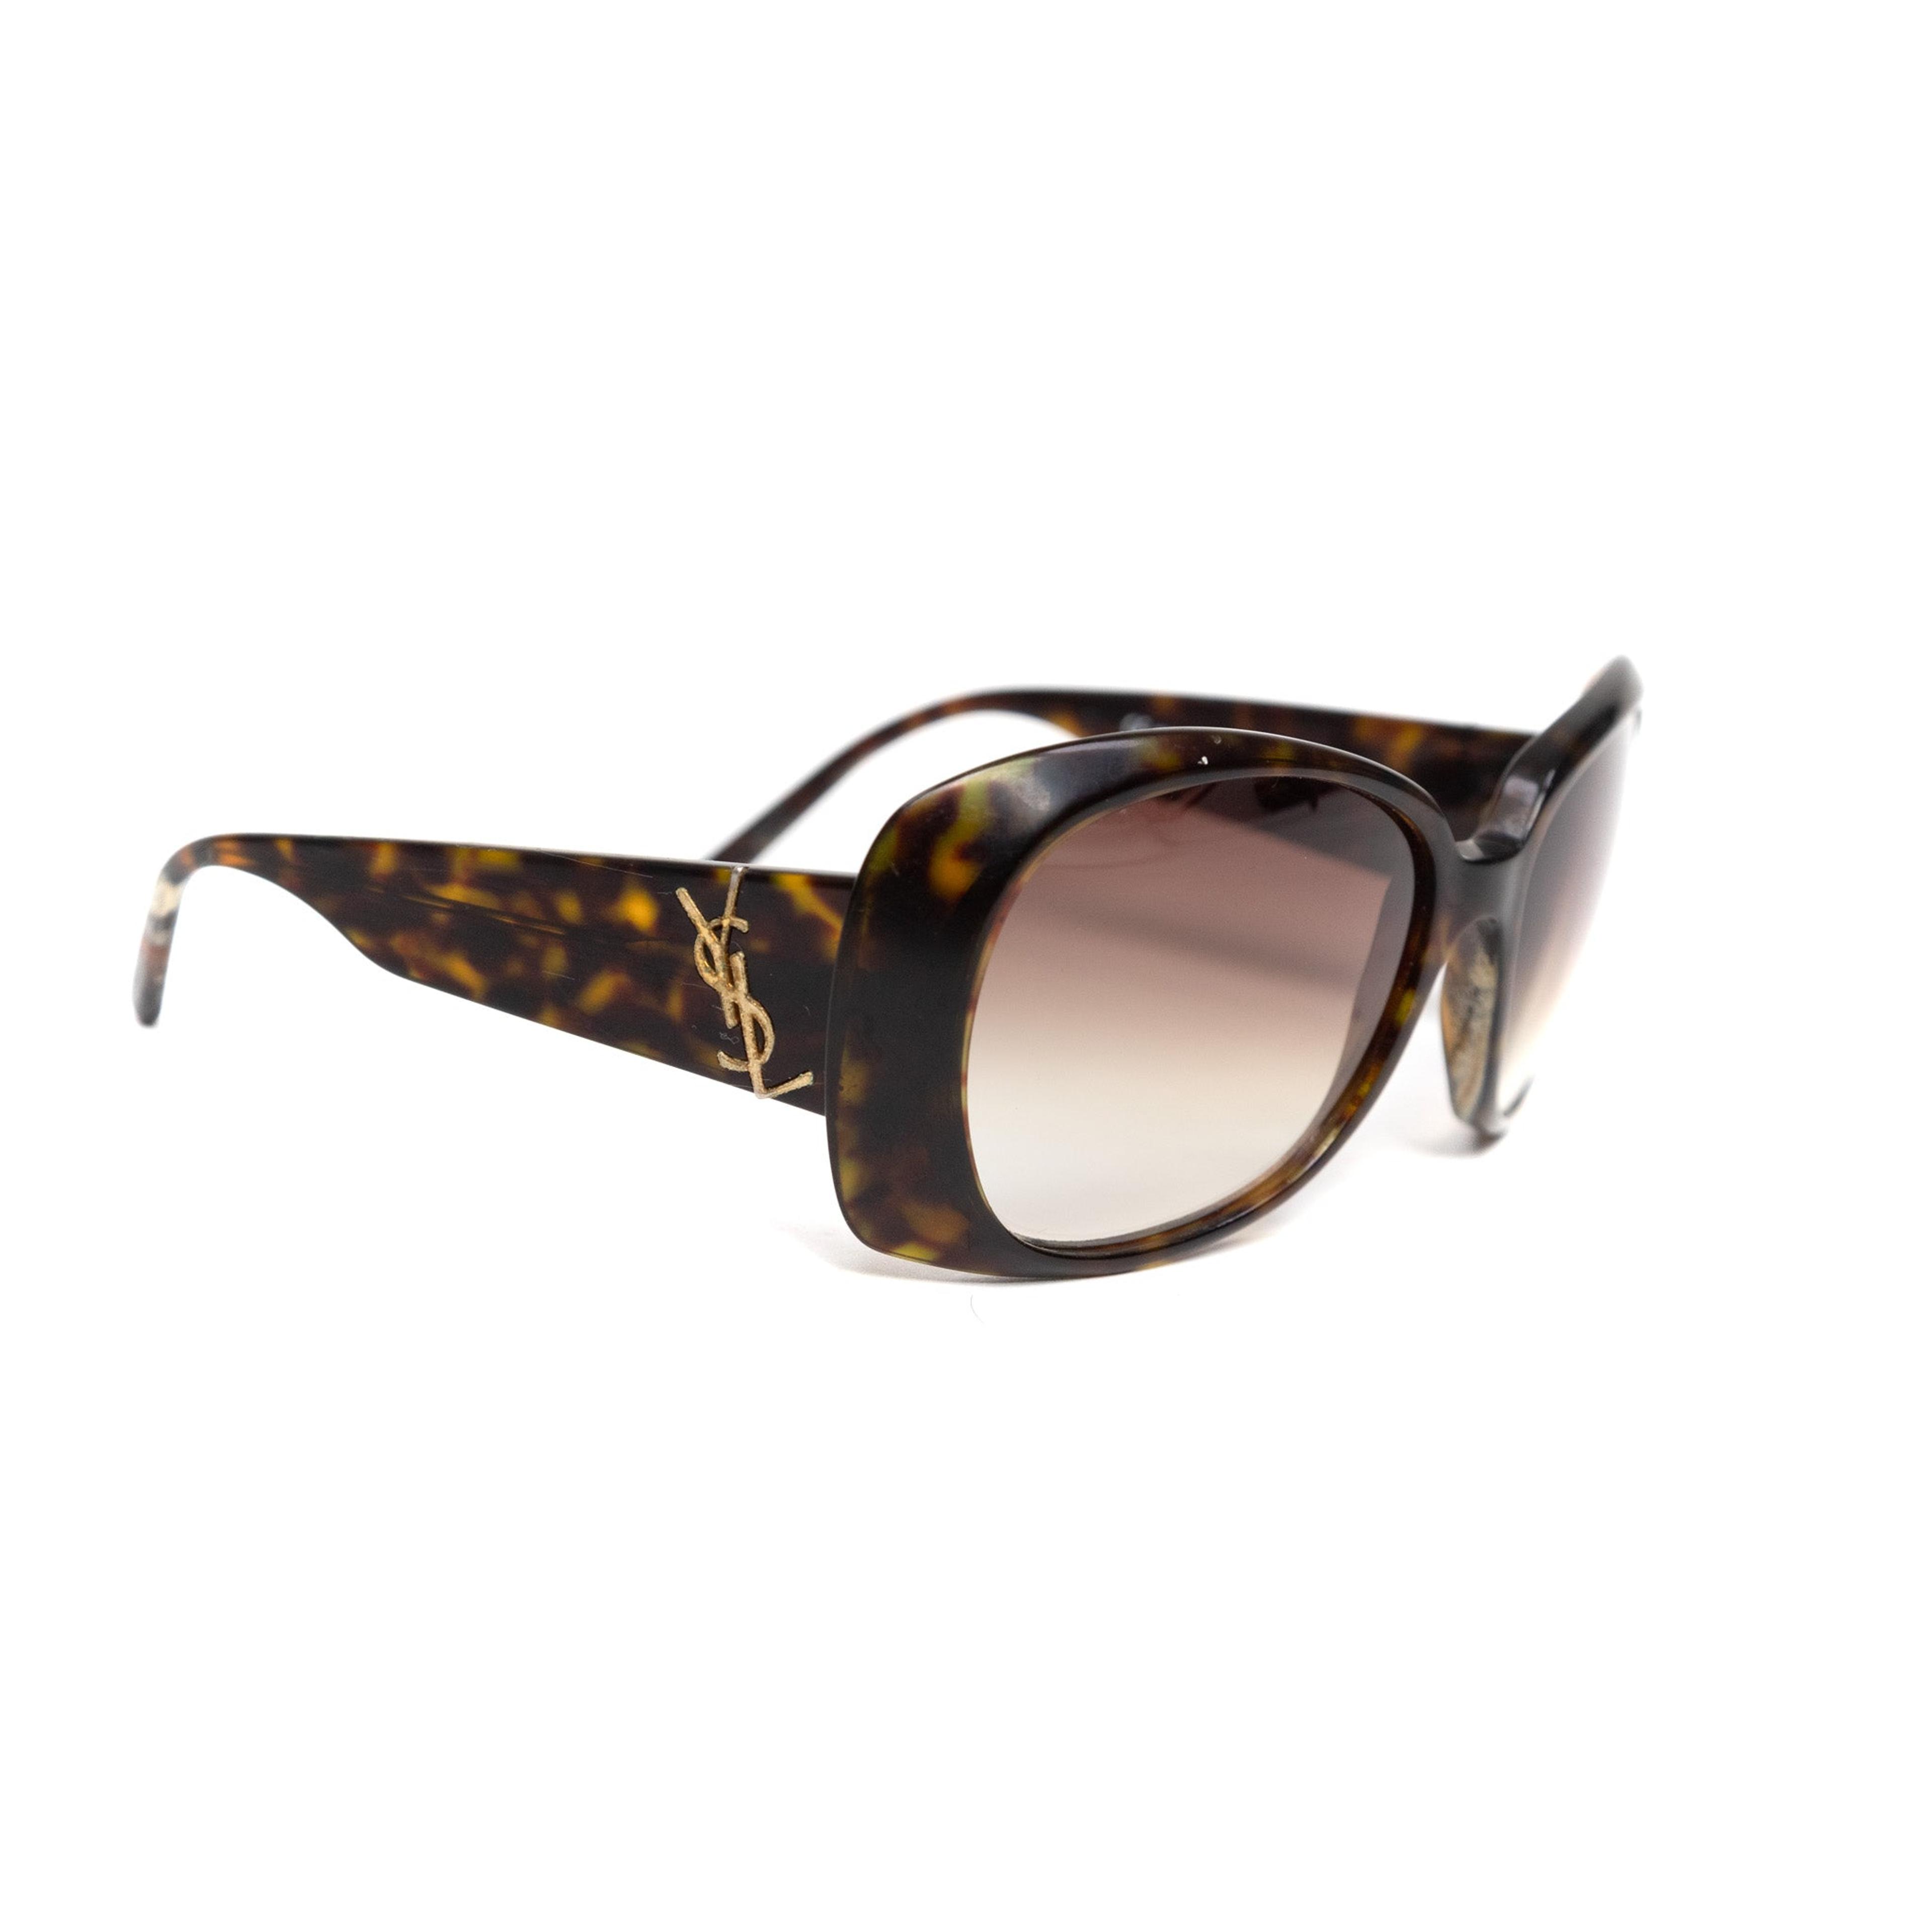 Alternate View 5 of Yves Saint Laurent Leopard Round Sunglasses